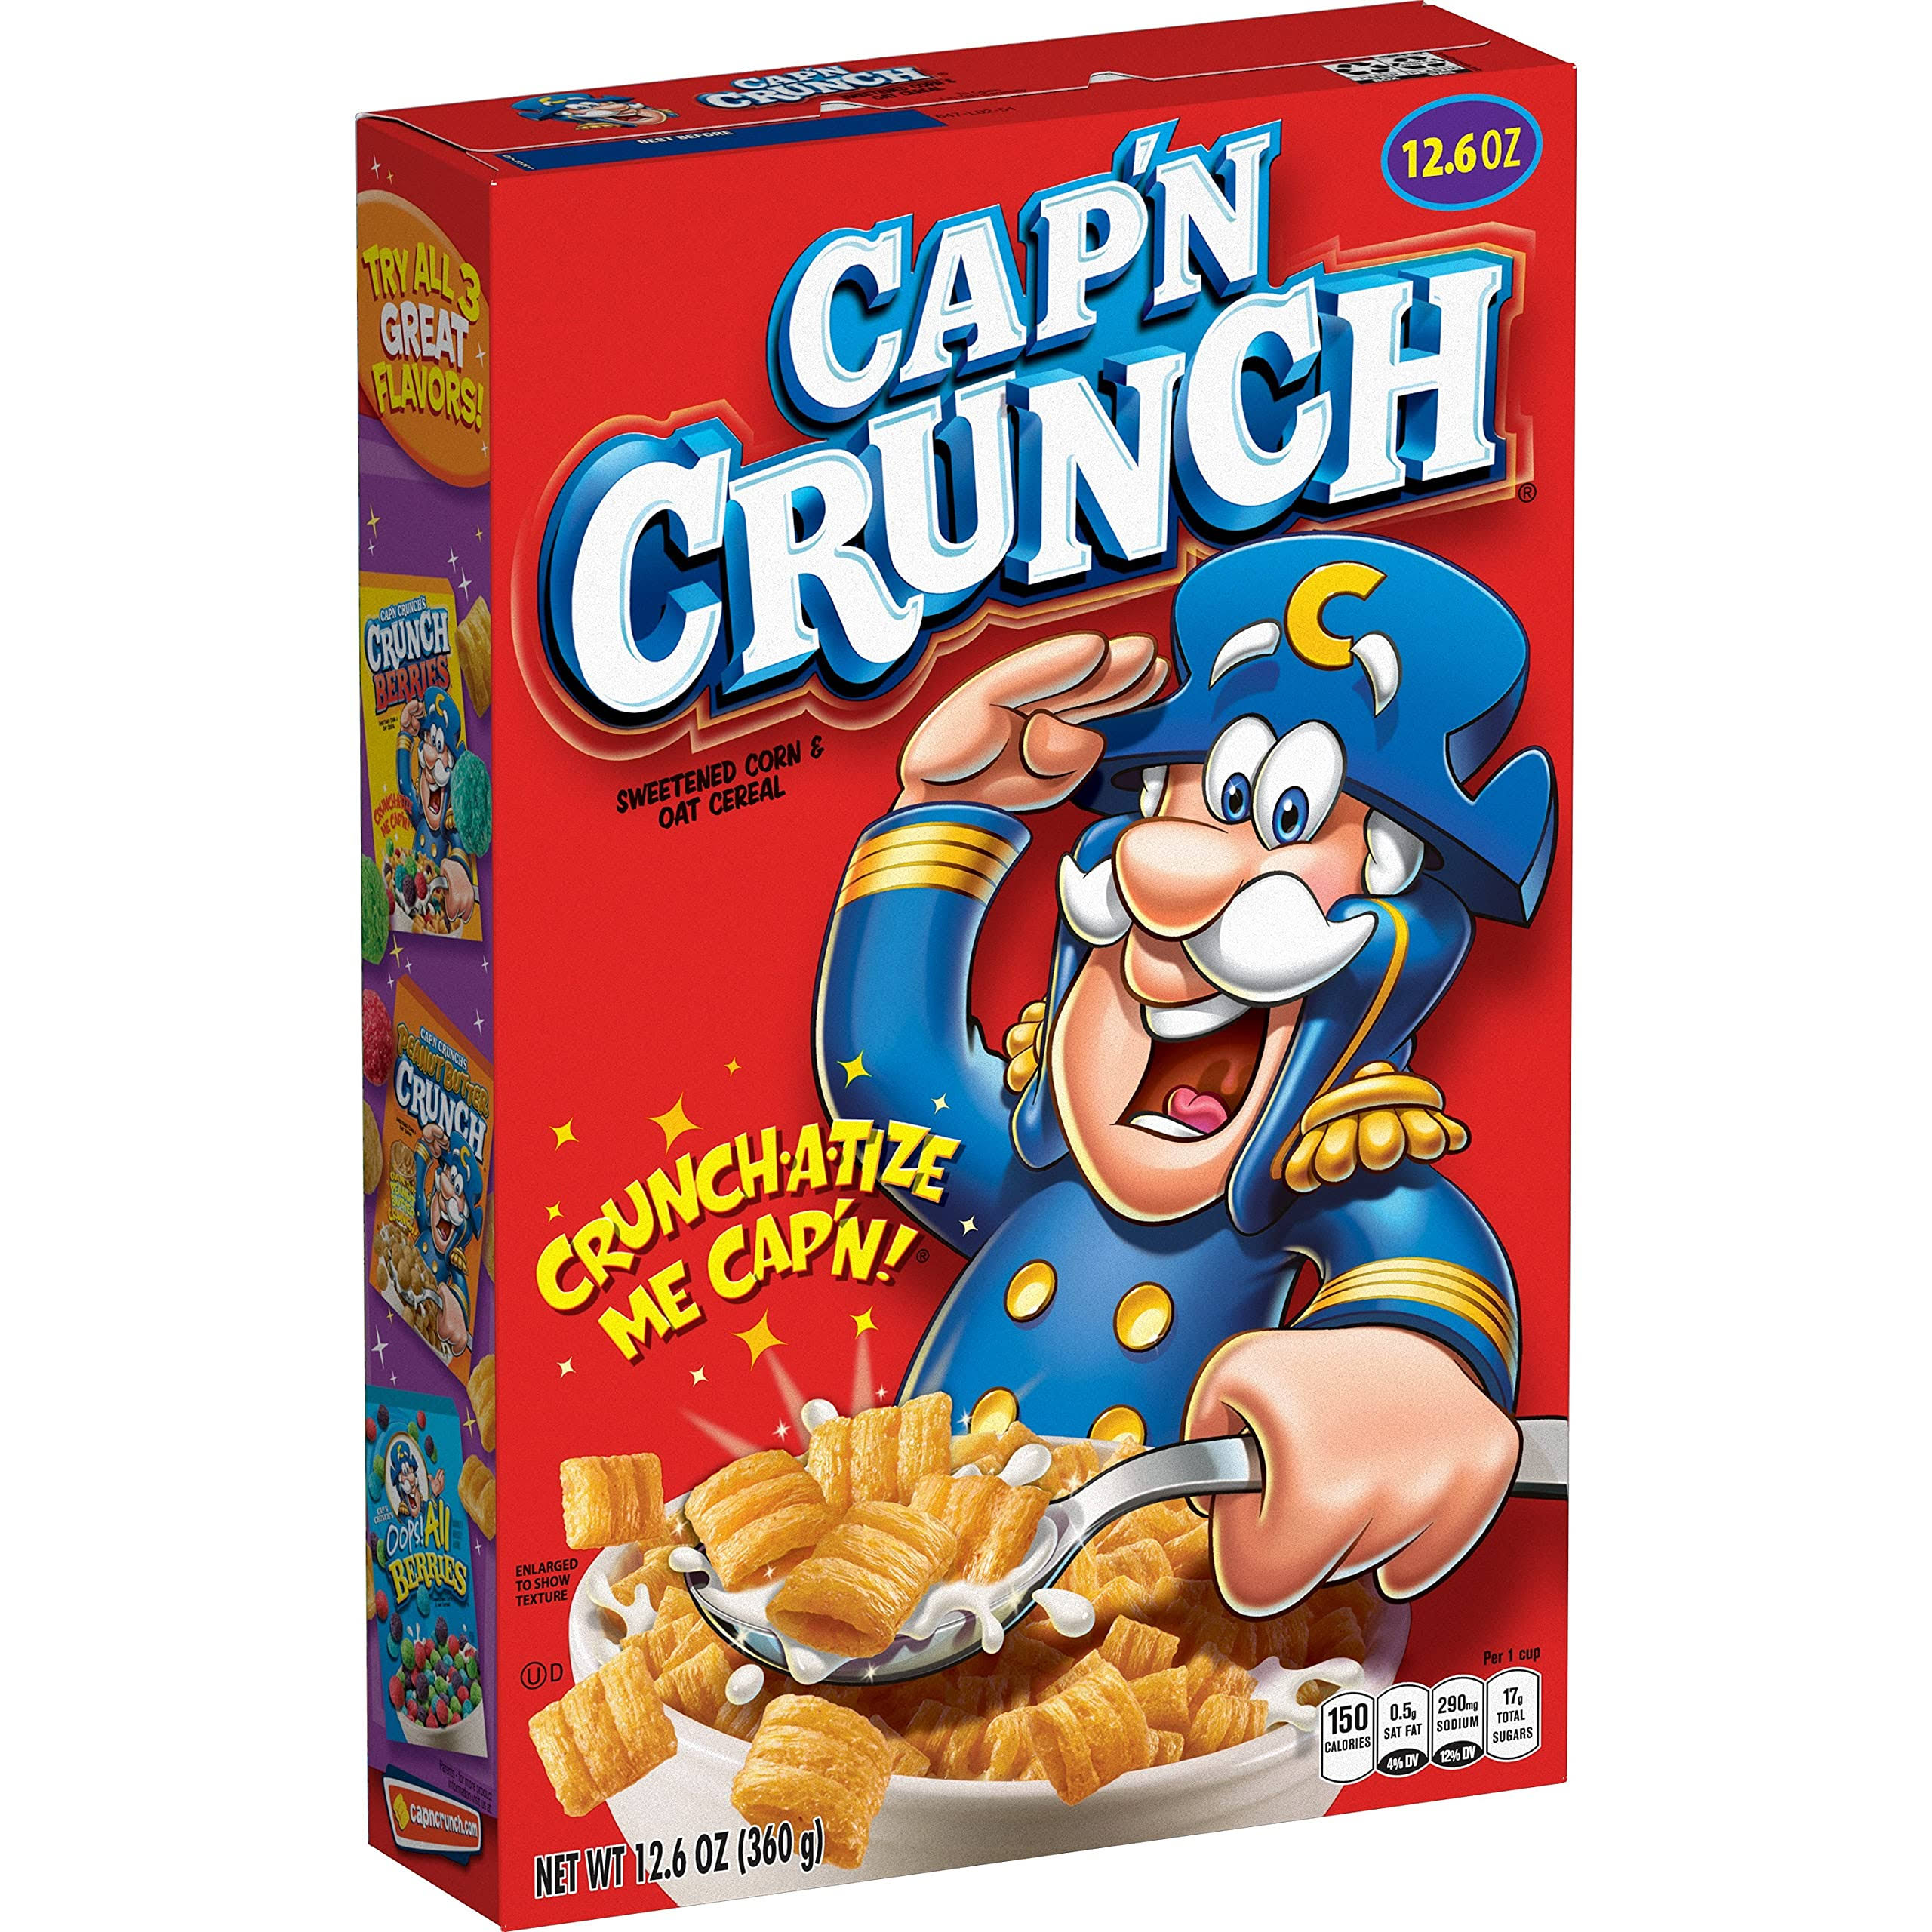 Cap'n Crunch Sweetened Corn & Oat Cereal - 12.6 oz